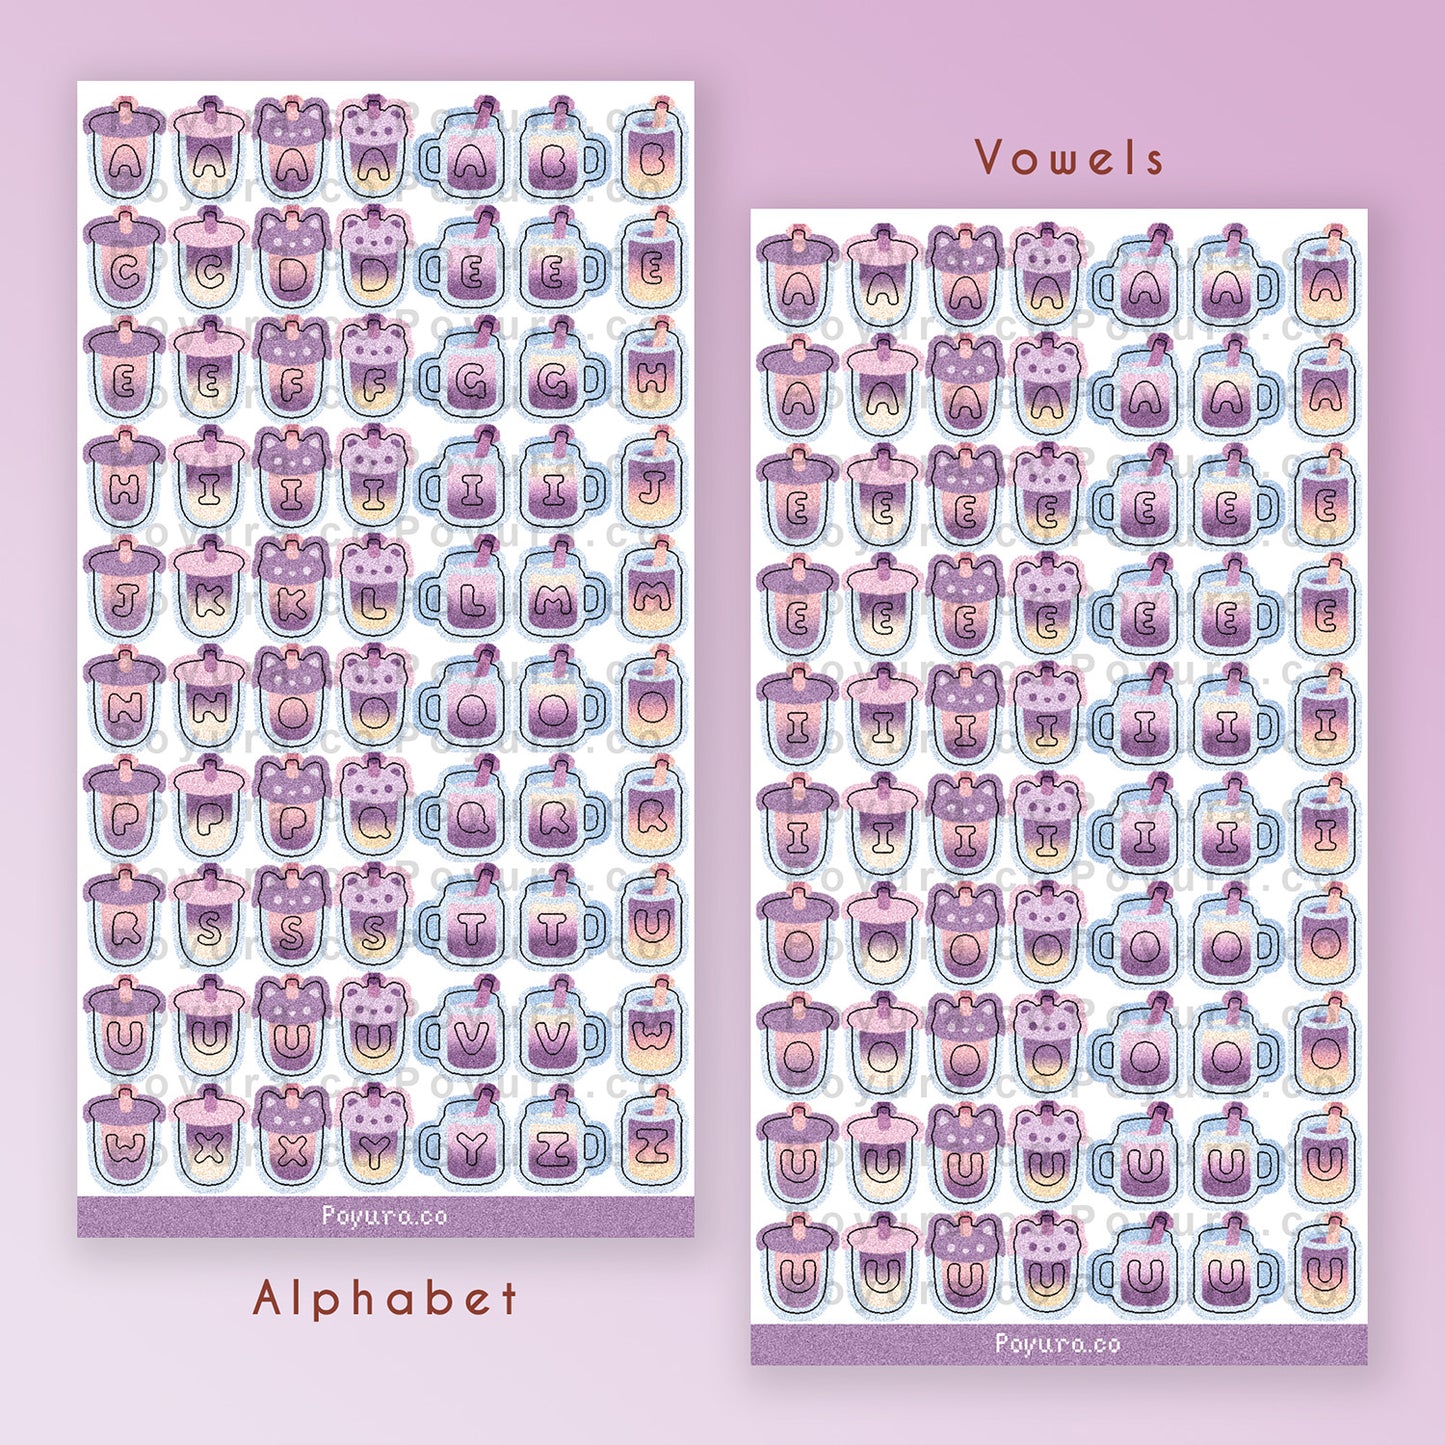 Boba Drink Alphabet Sticker Sheet